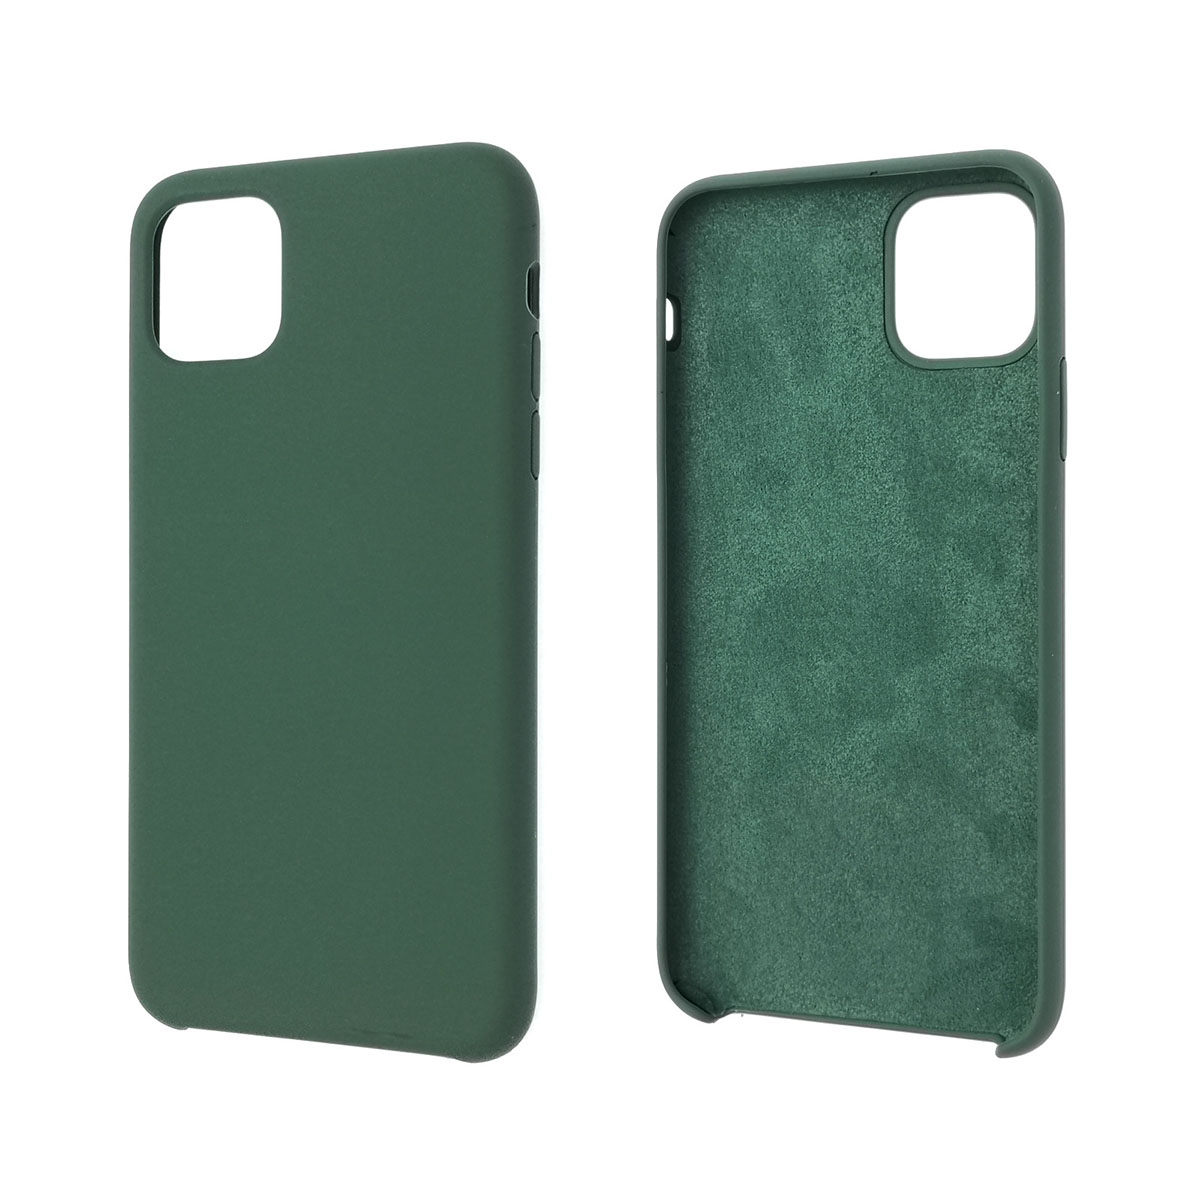 Чехол накладка Silicon Case для APPLE iPhone 11 Pro MAX, силикон, бархат, цвет еловый